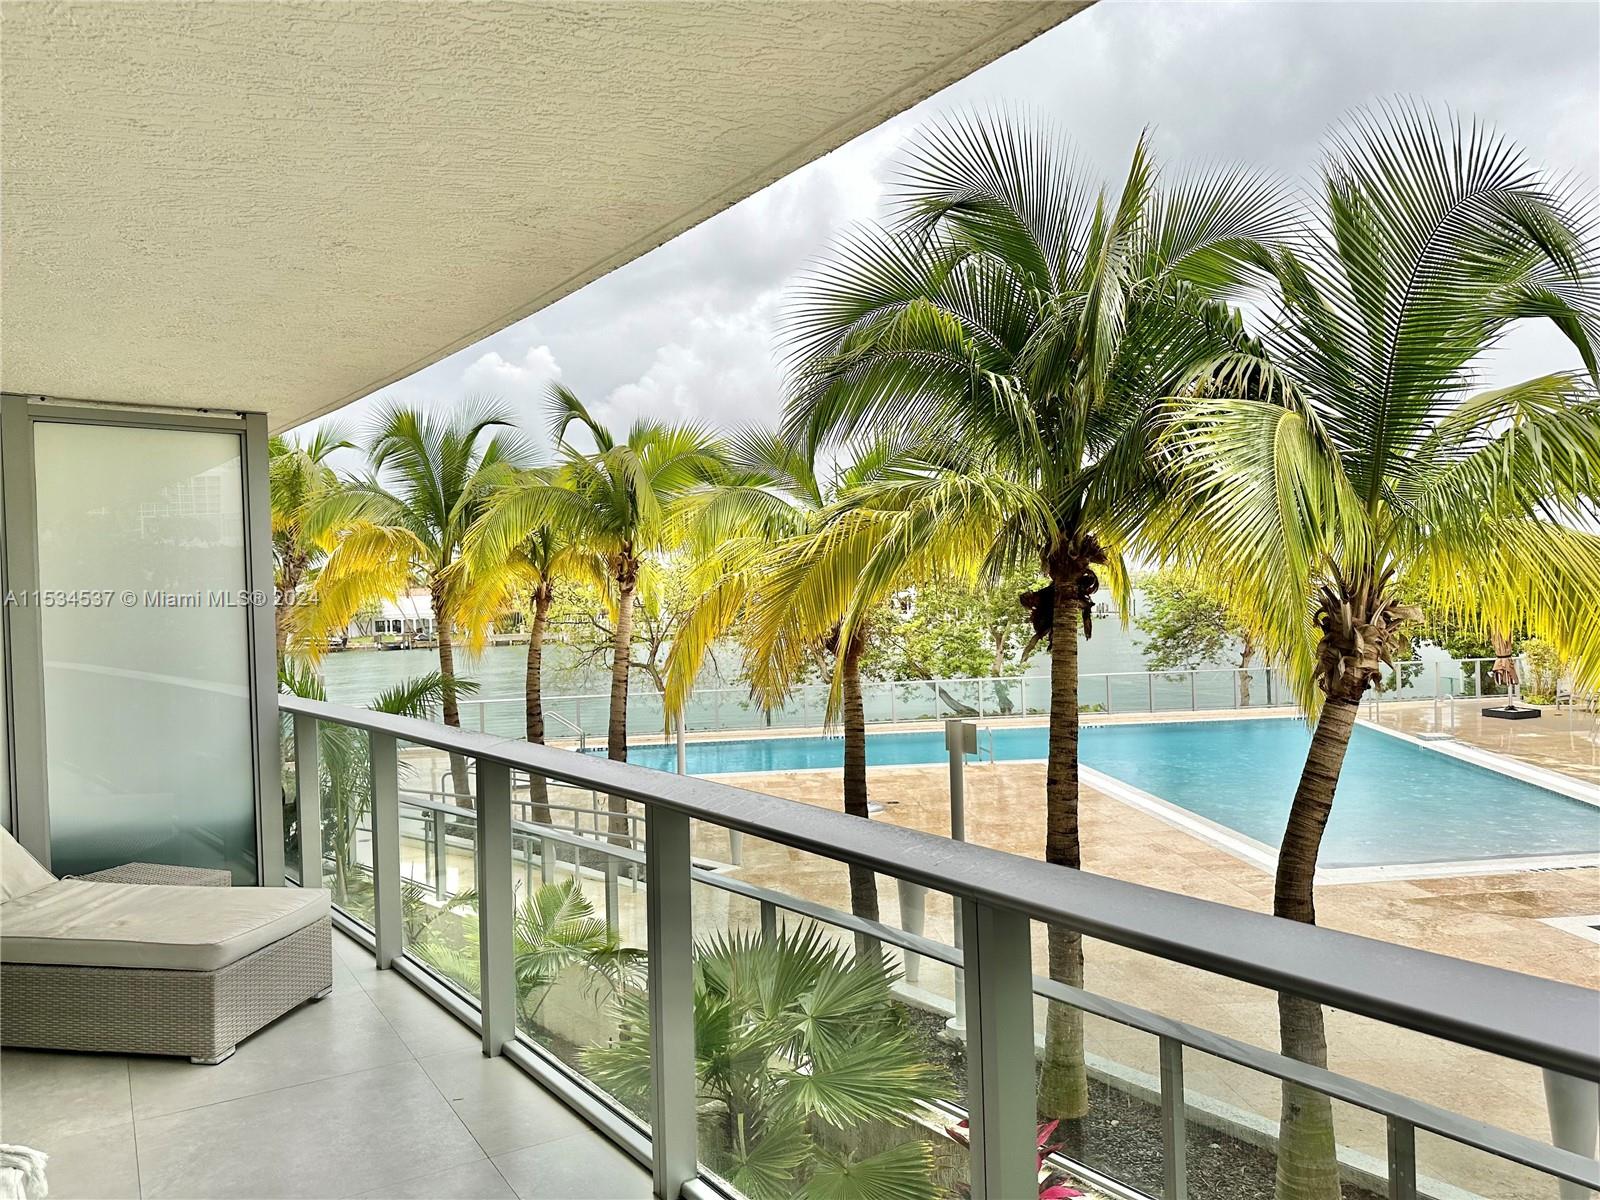 Rental Property at 6620 Indian Creek Dr 213, Miami Beach, Miami-Dade County, Florida - Bedrooms: 2 
Bathrooms: 2  - $4,300 MO.